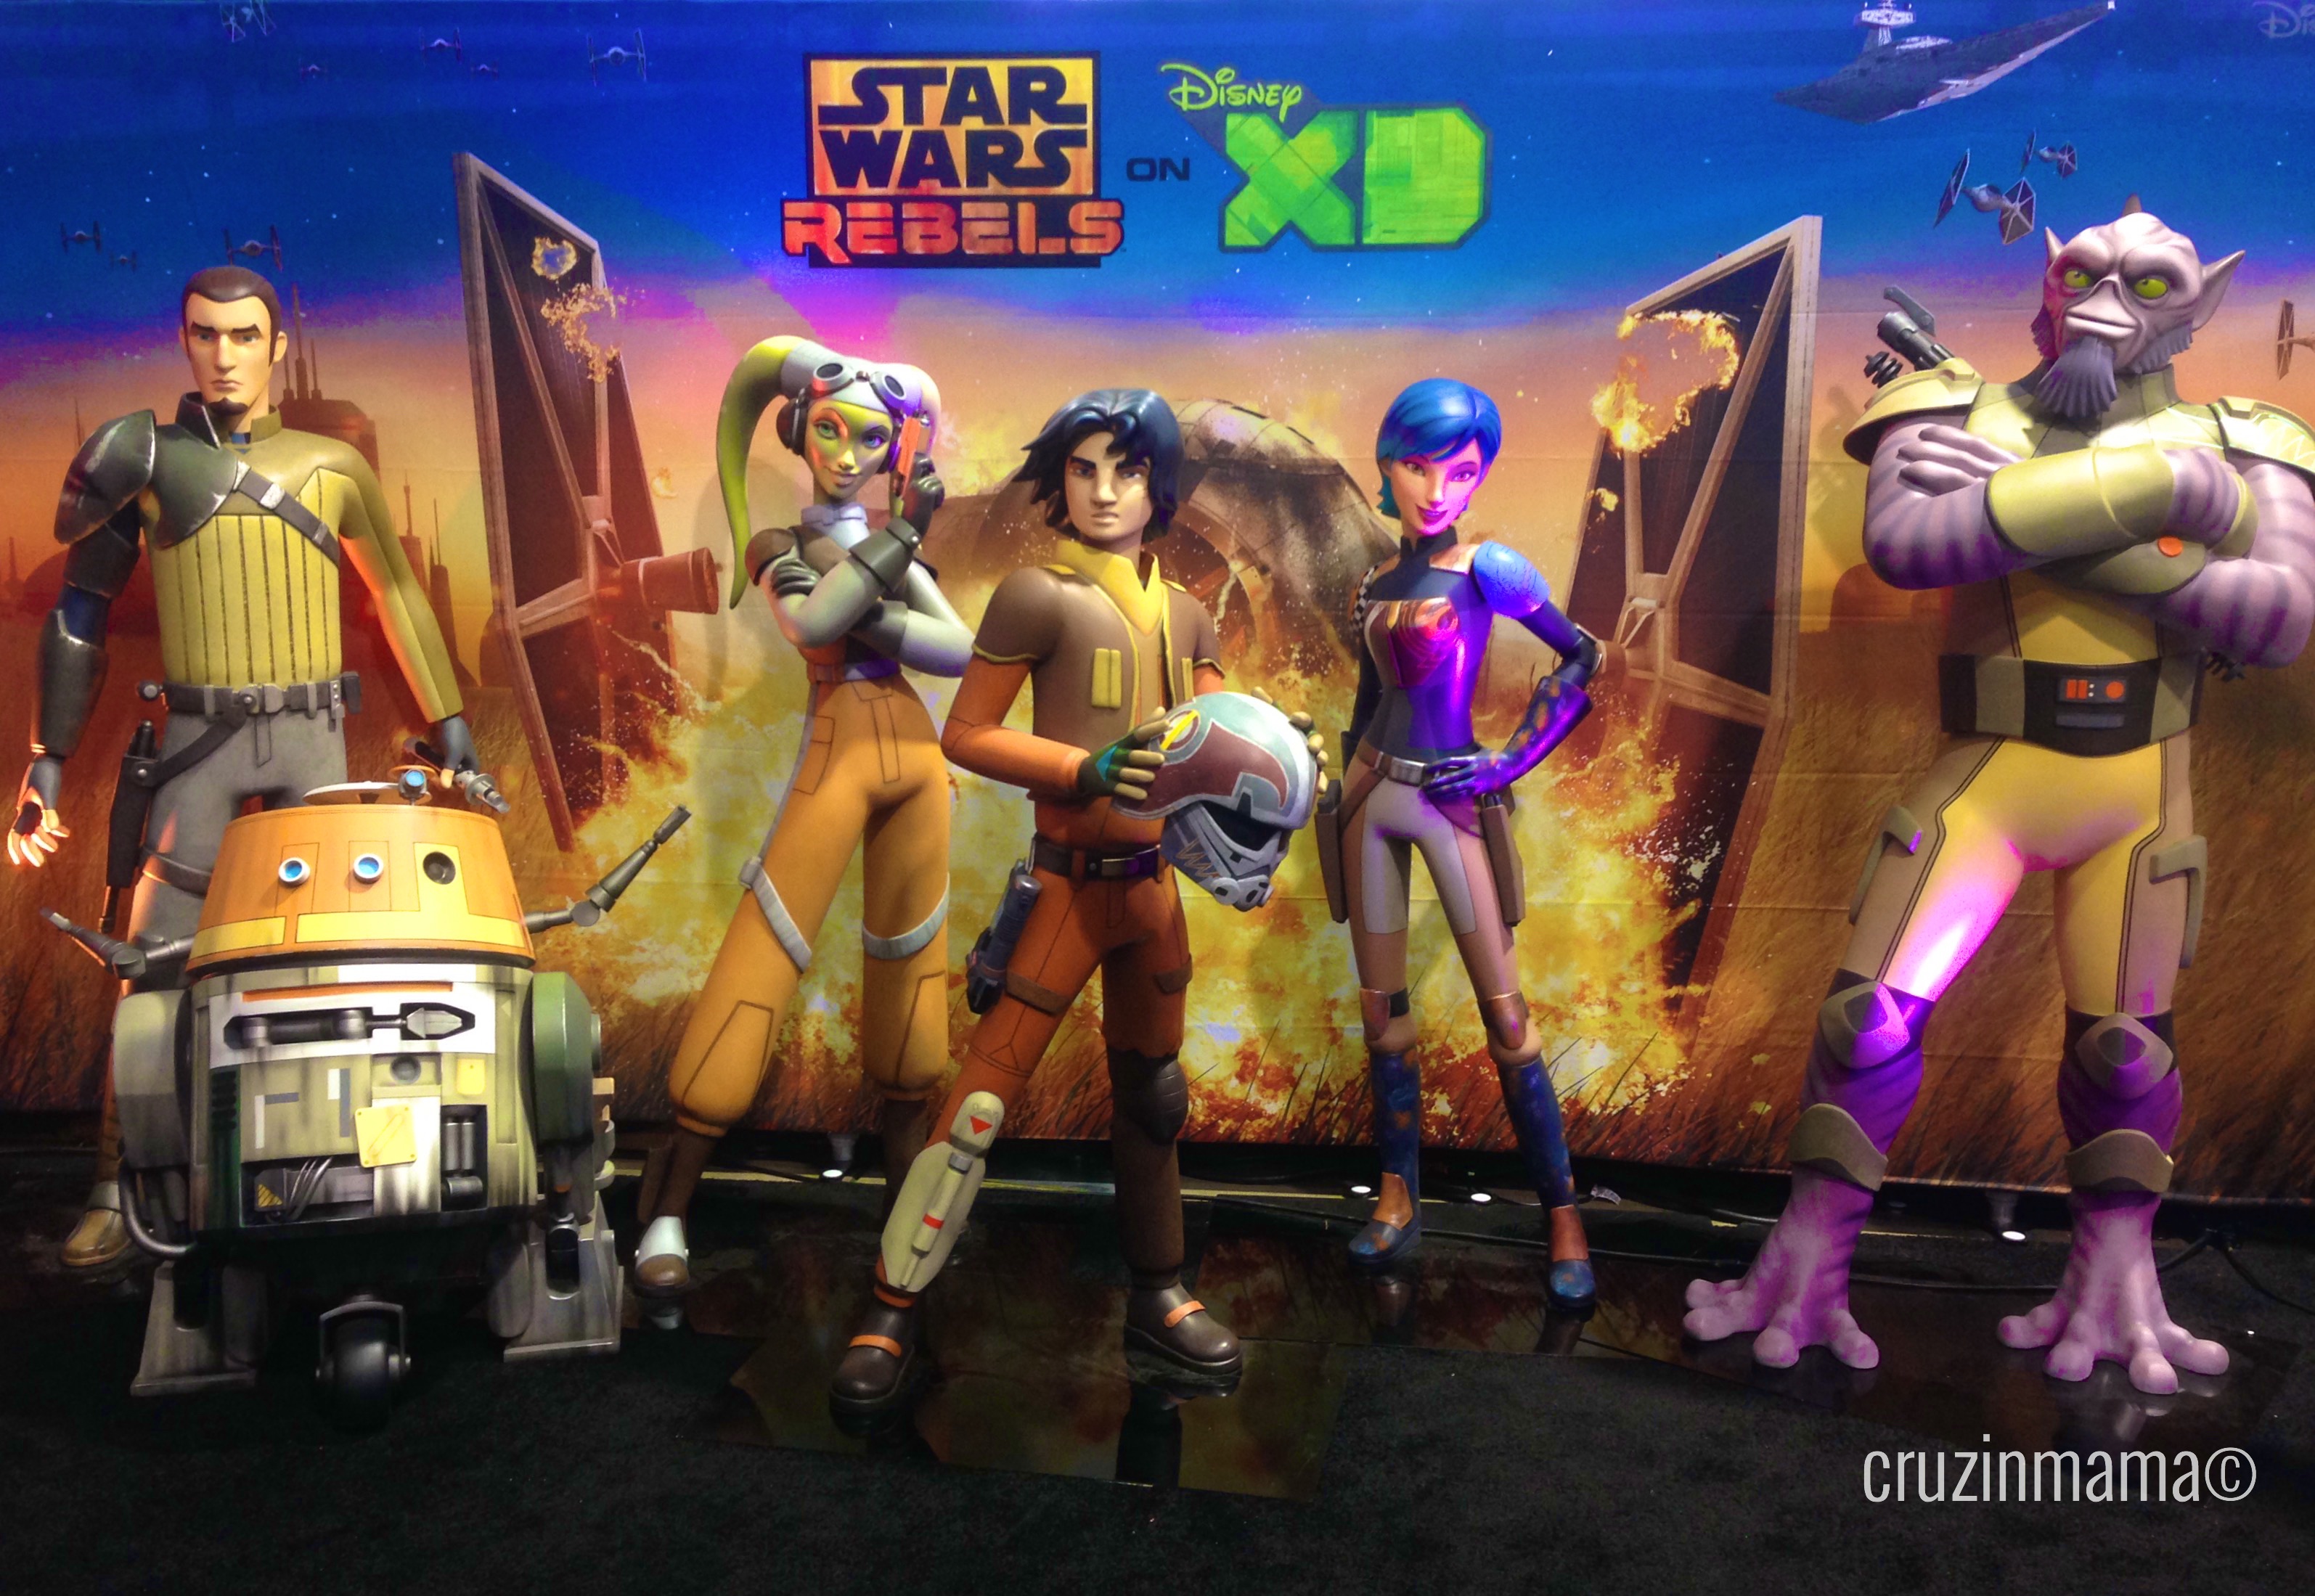 Star Wars Rebels On Disney Xd - Star Wars Celebration Rebels Statues Life Size - HD Wallpaper 